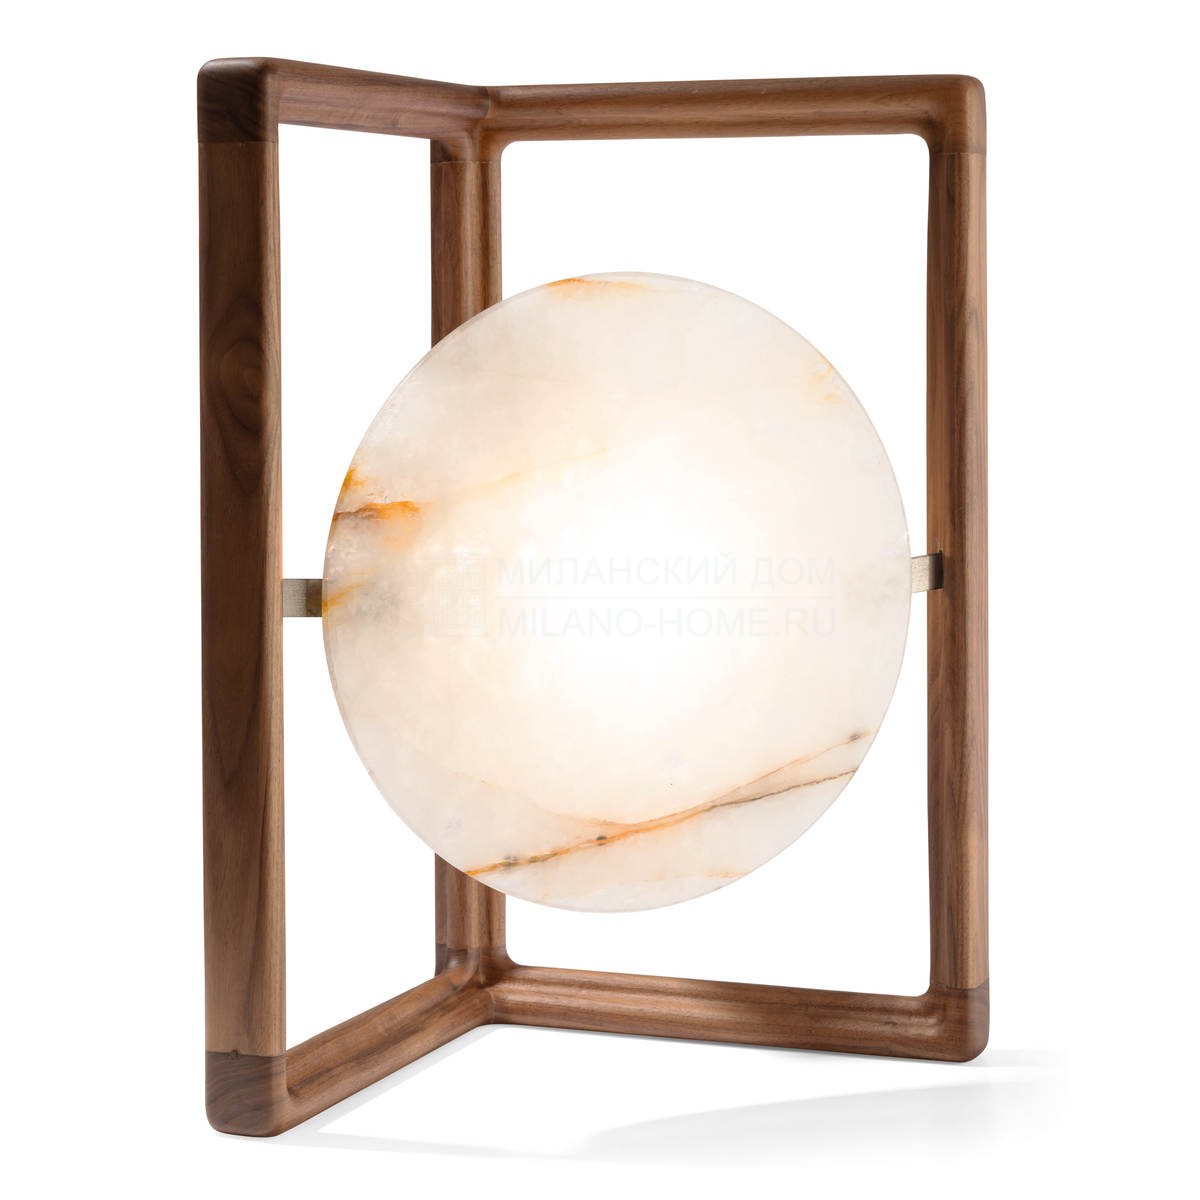 Настольная лампа Moon-eye table lamp из Италии фабрики IPE CAVALLI VISIONNAIRE